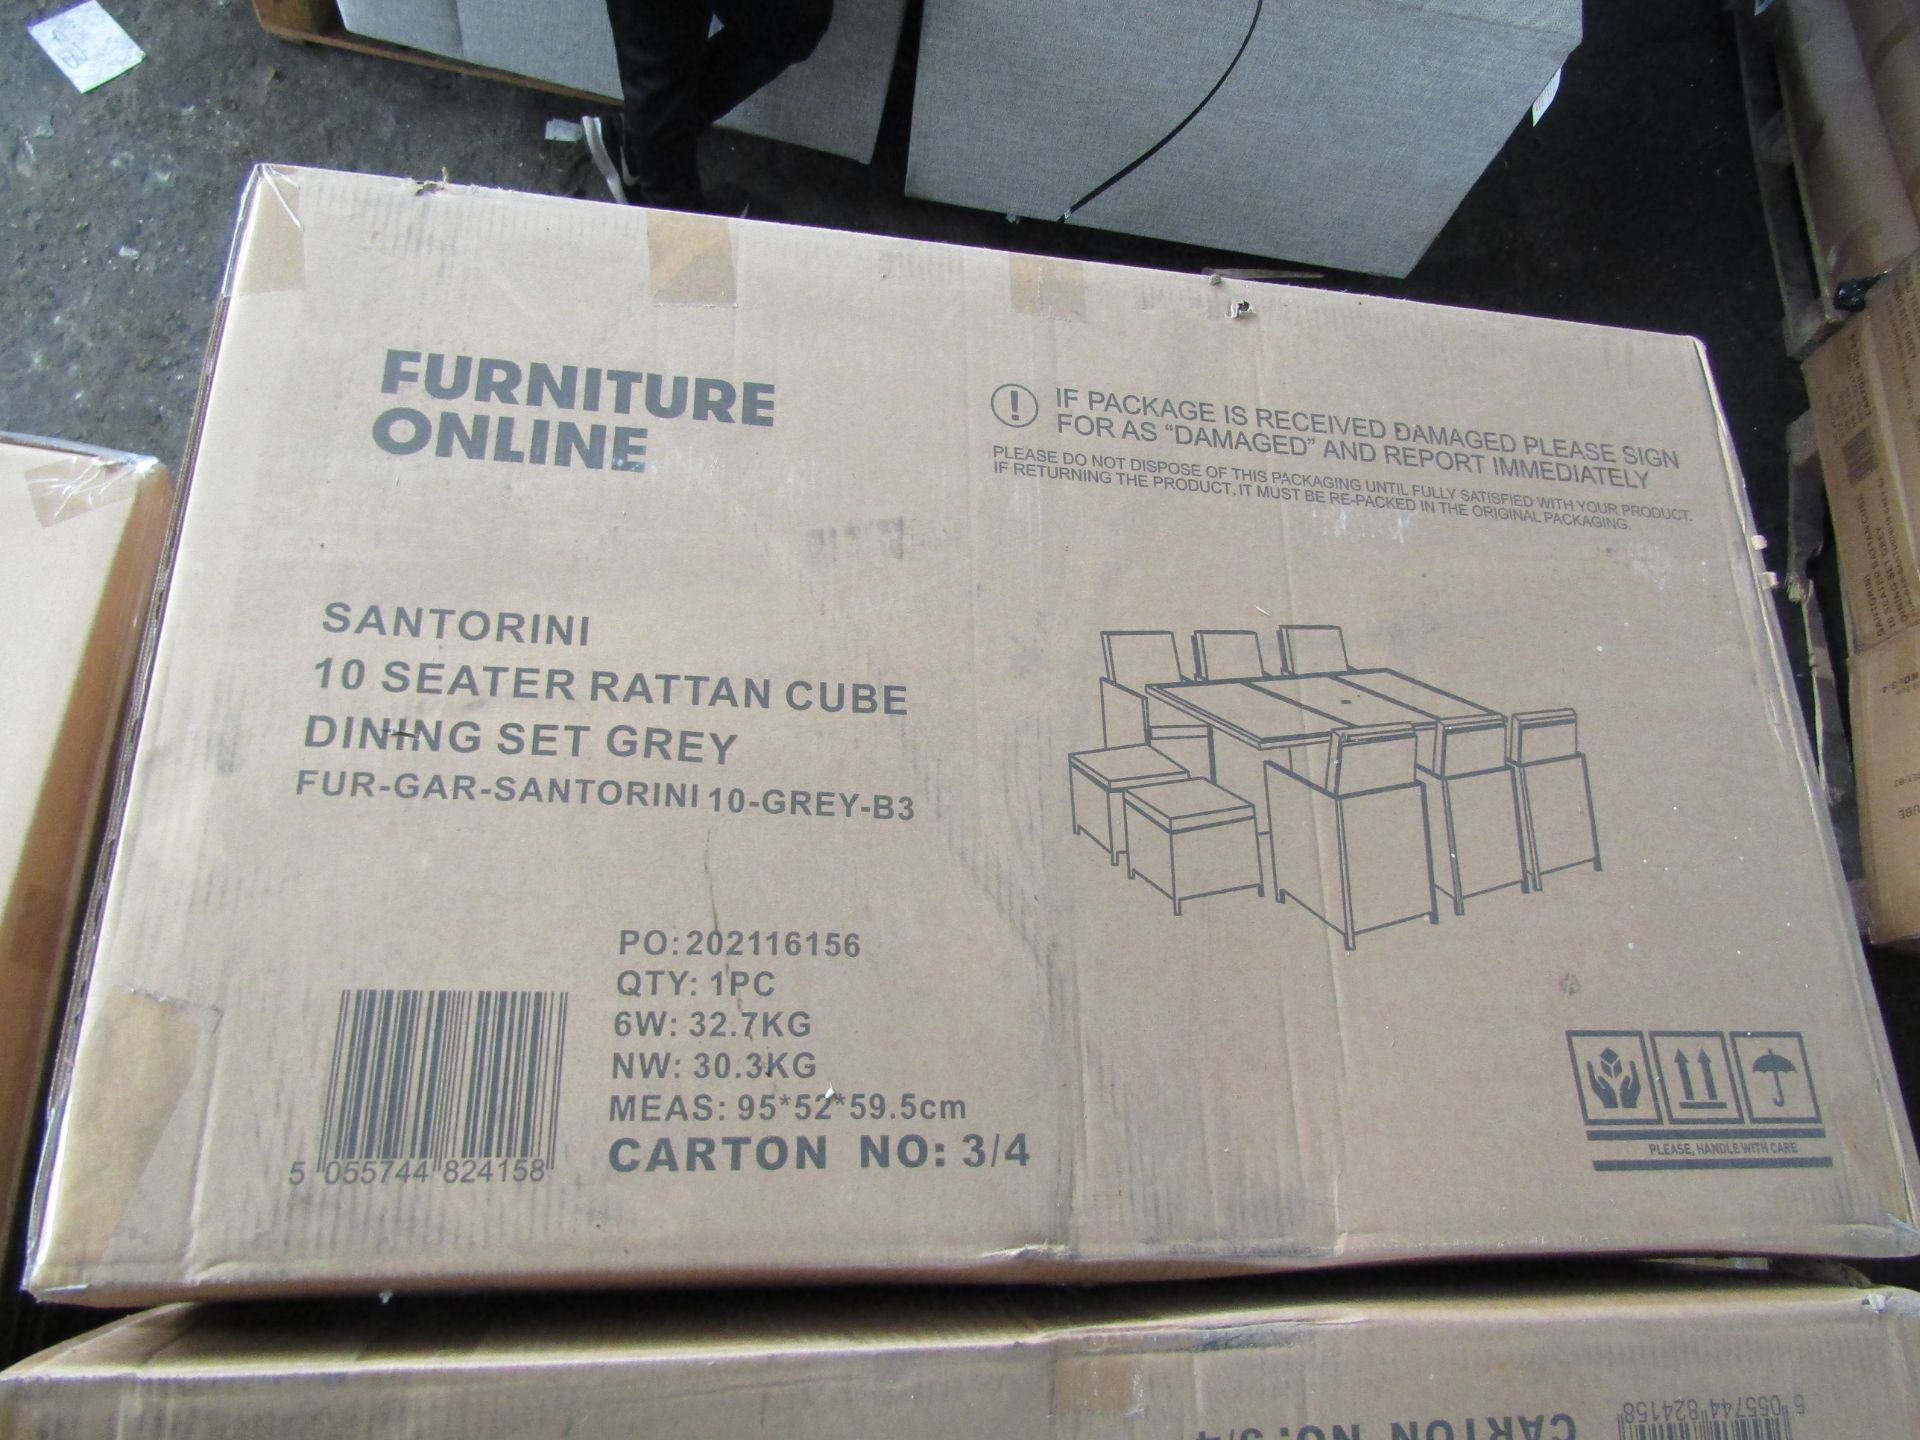 3 x Furniture Online Ex-Retail Customer Returns Mixed Lot - Total RRP est. 1124.25